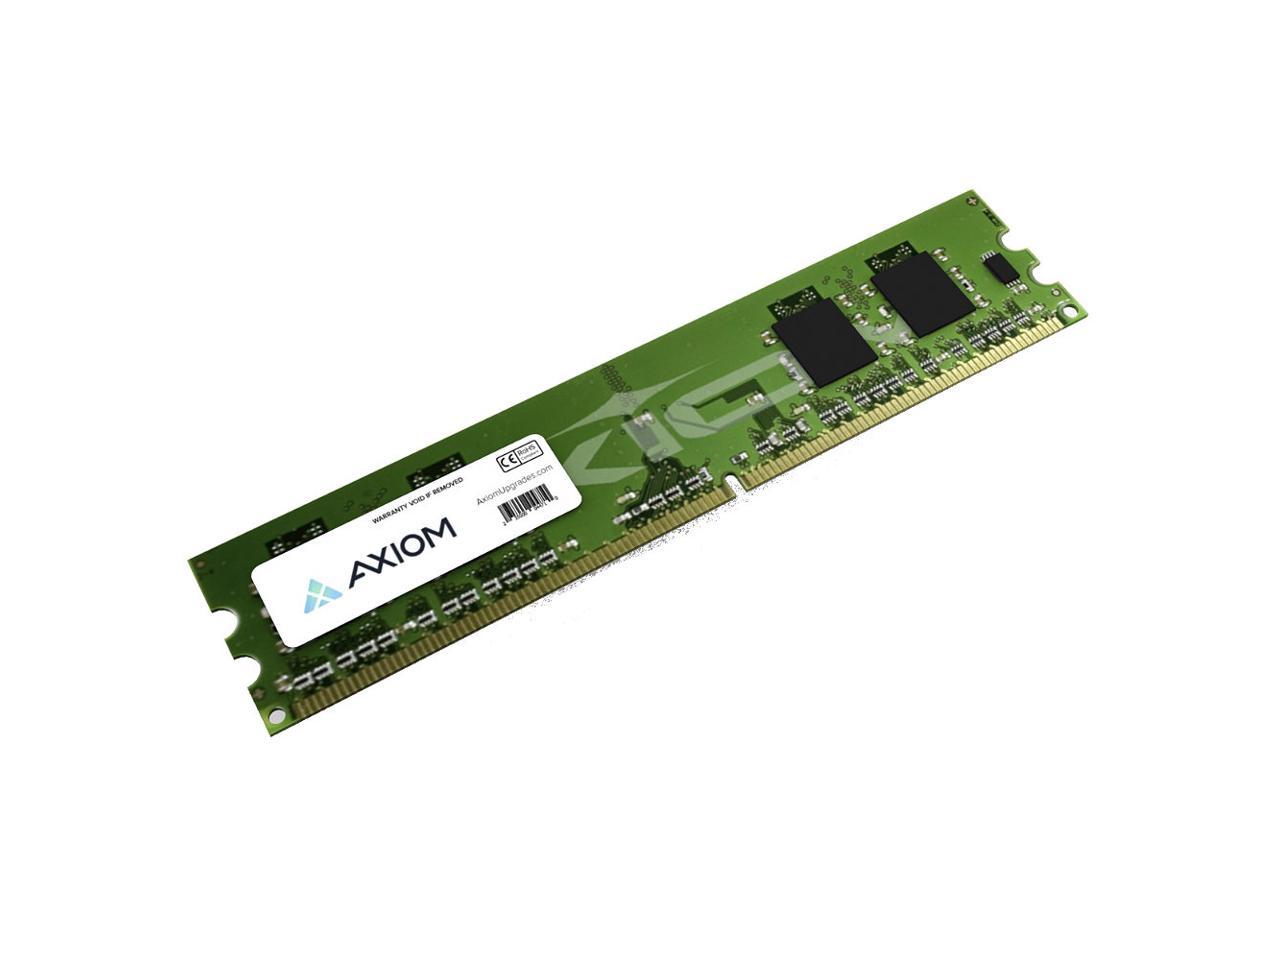 Axiom 4GB (2 x 2GB) DDR2 533 (PC2 4200) Desktop Memory Model AX2533N4S